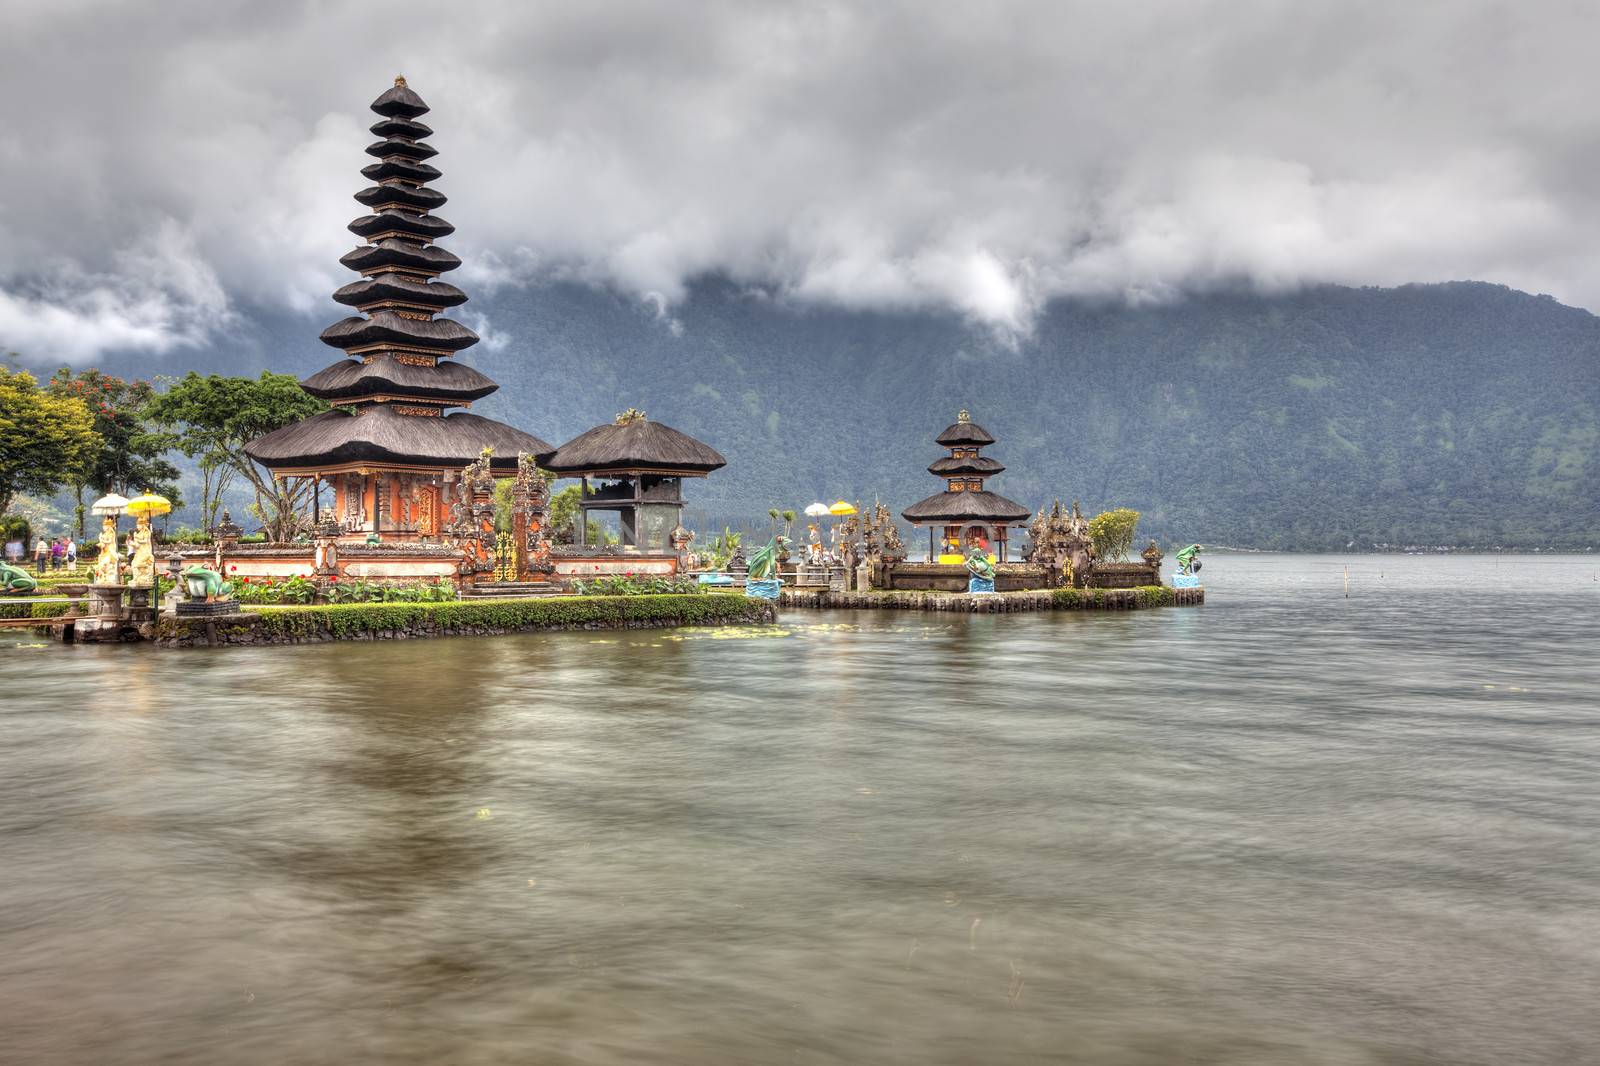 Ulun Danu temple at Beratan Lake in Bali Indonesia